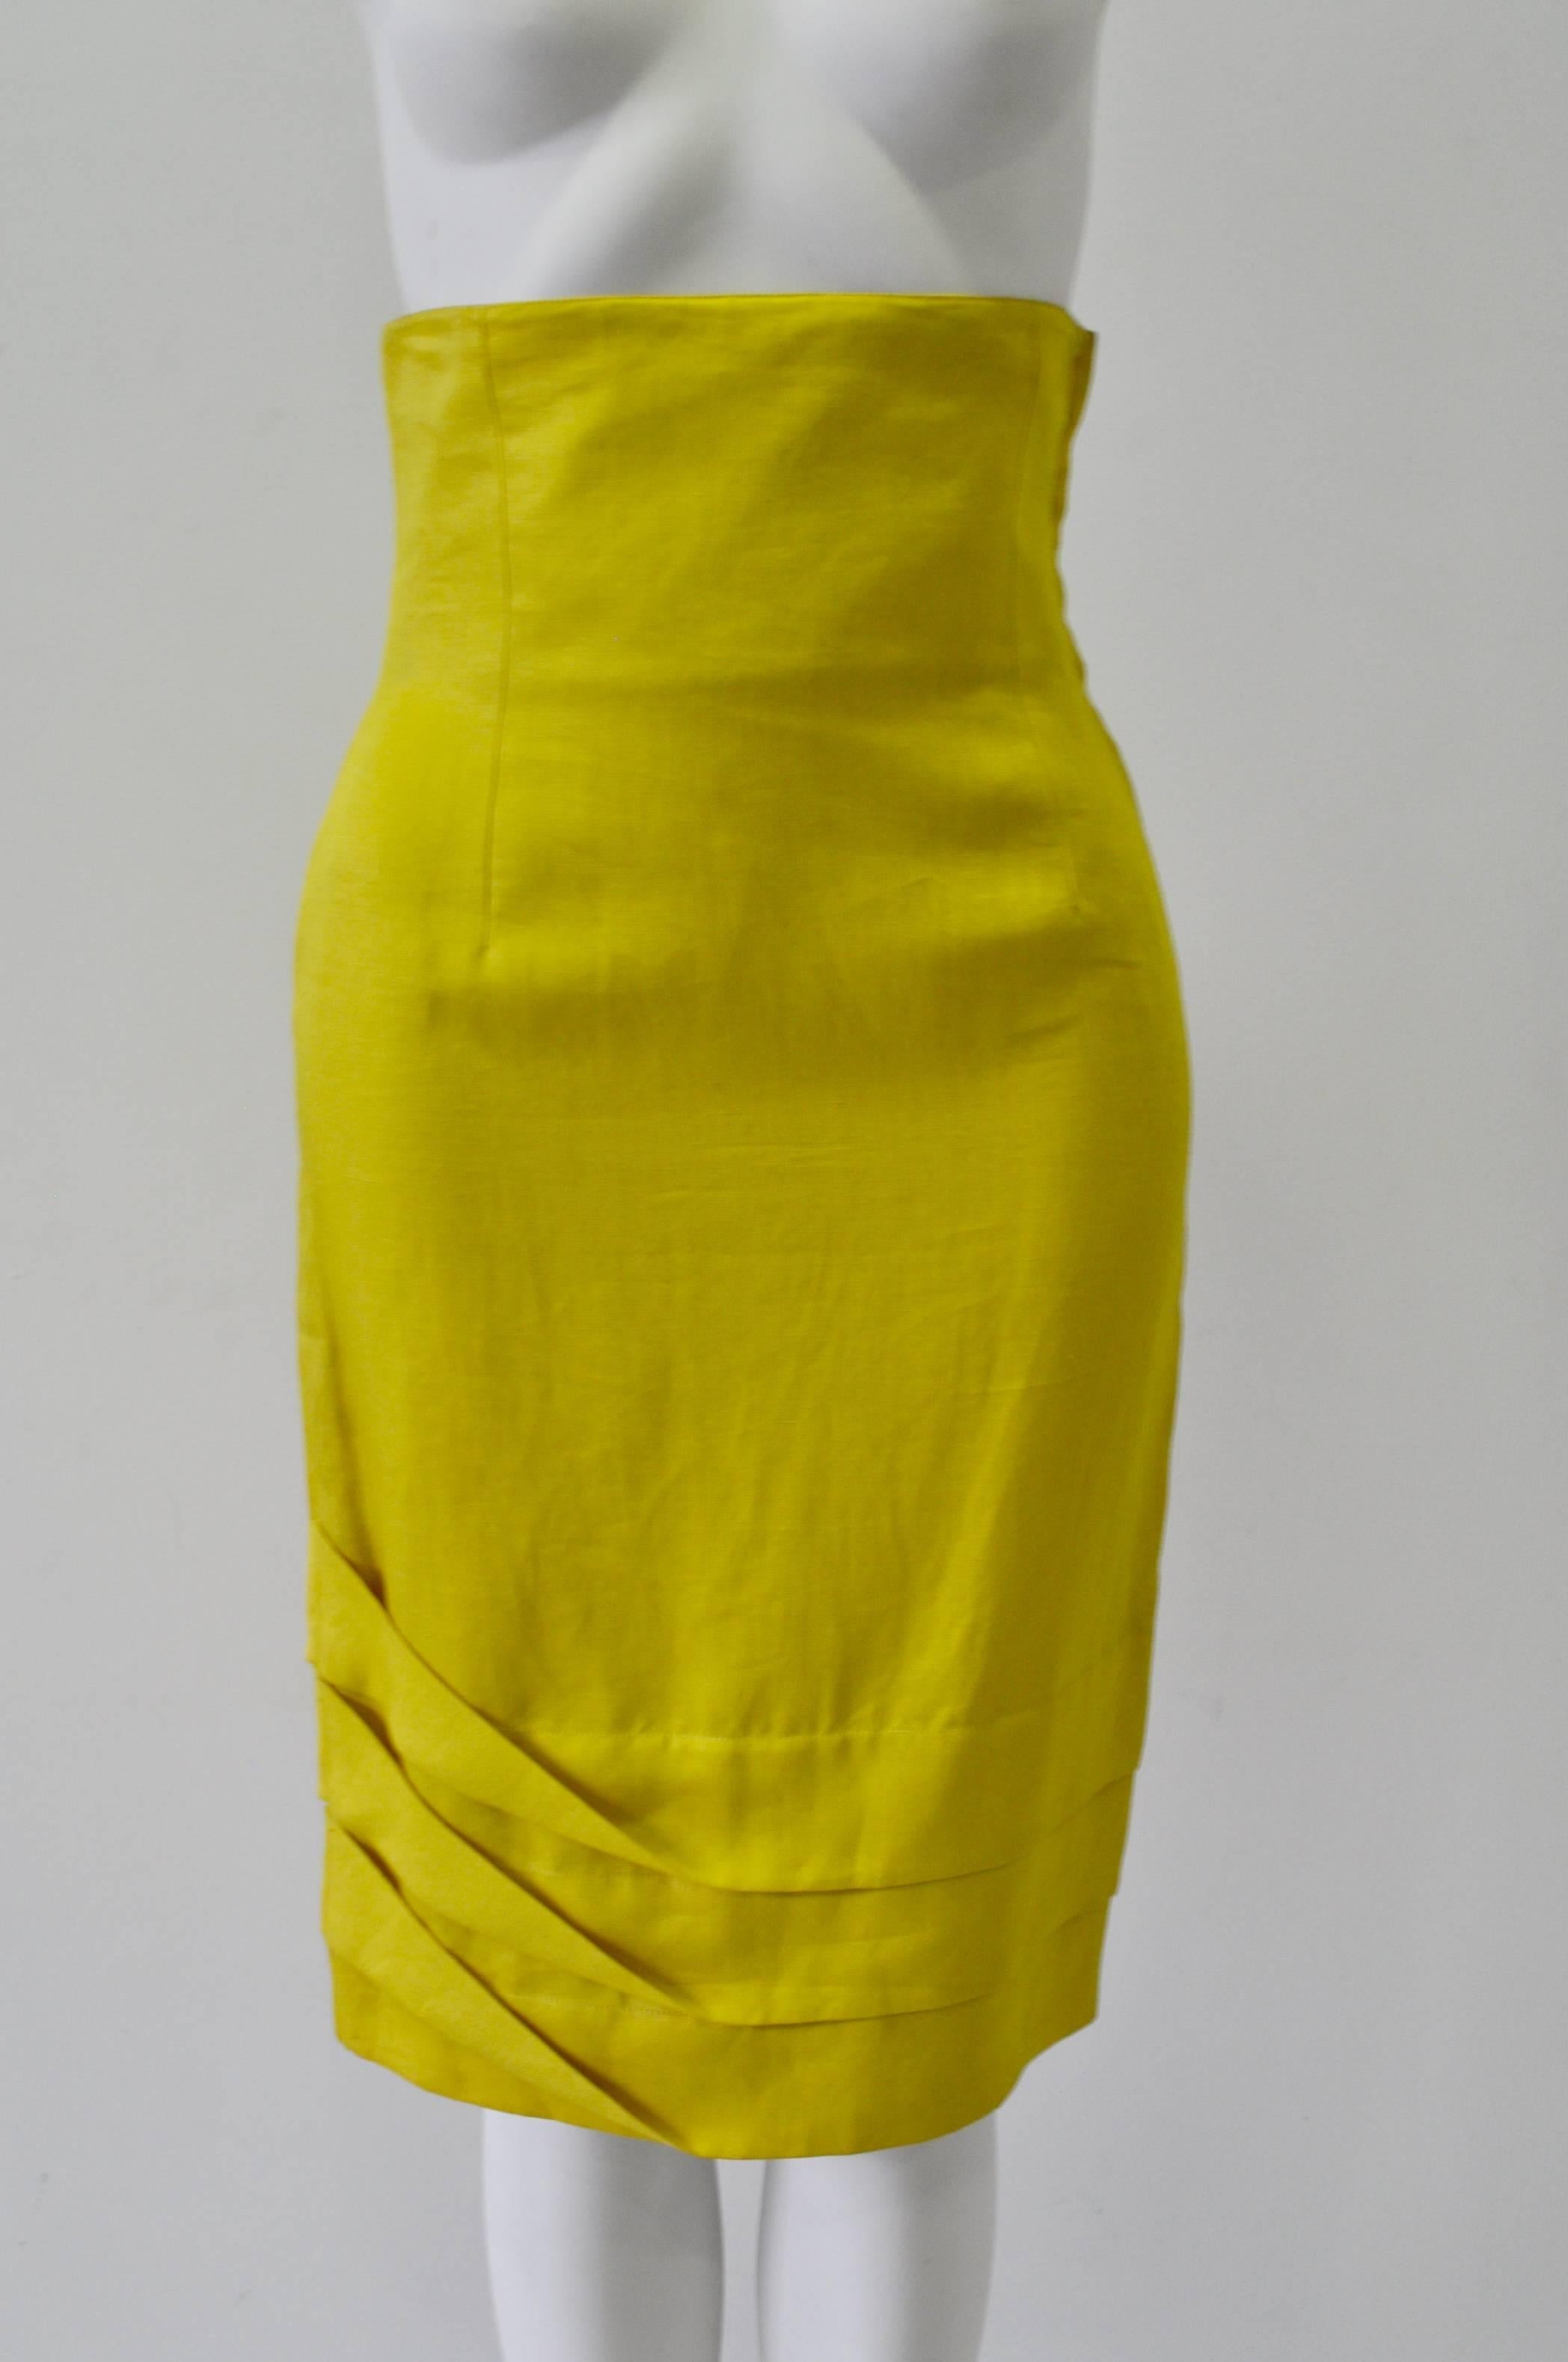 Exceptional Gianni Versace Haute Yellow High Waisted 100% Linen Skirt featuring Original One-Sided 3 Tier Pleat Detail Hem